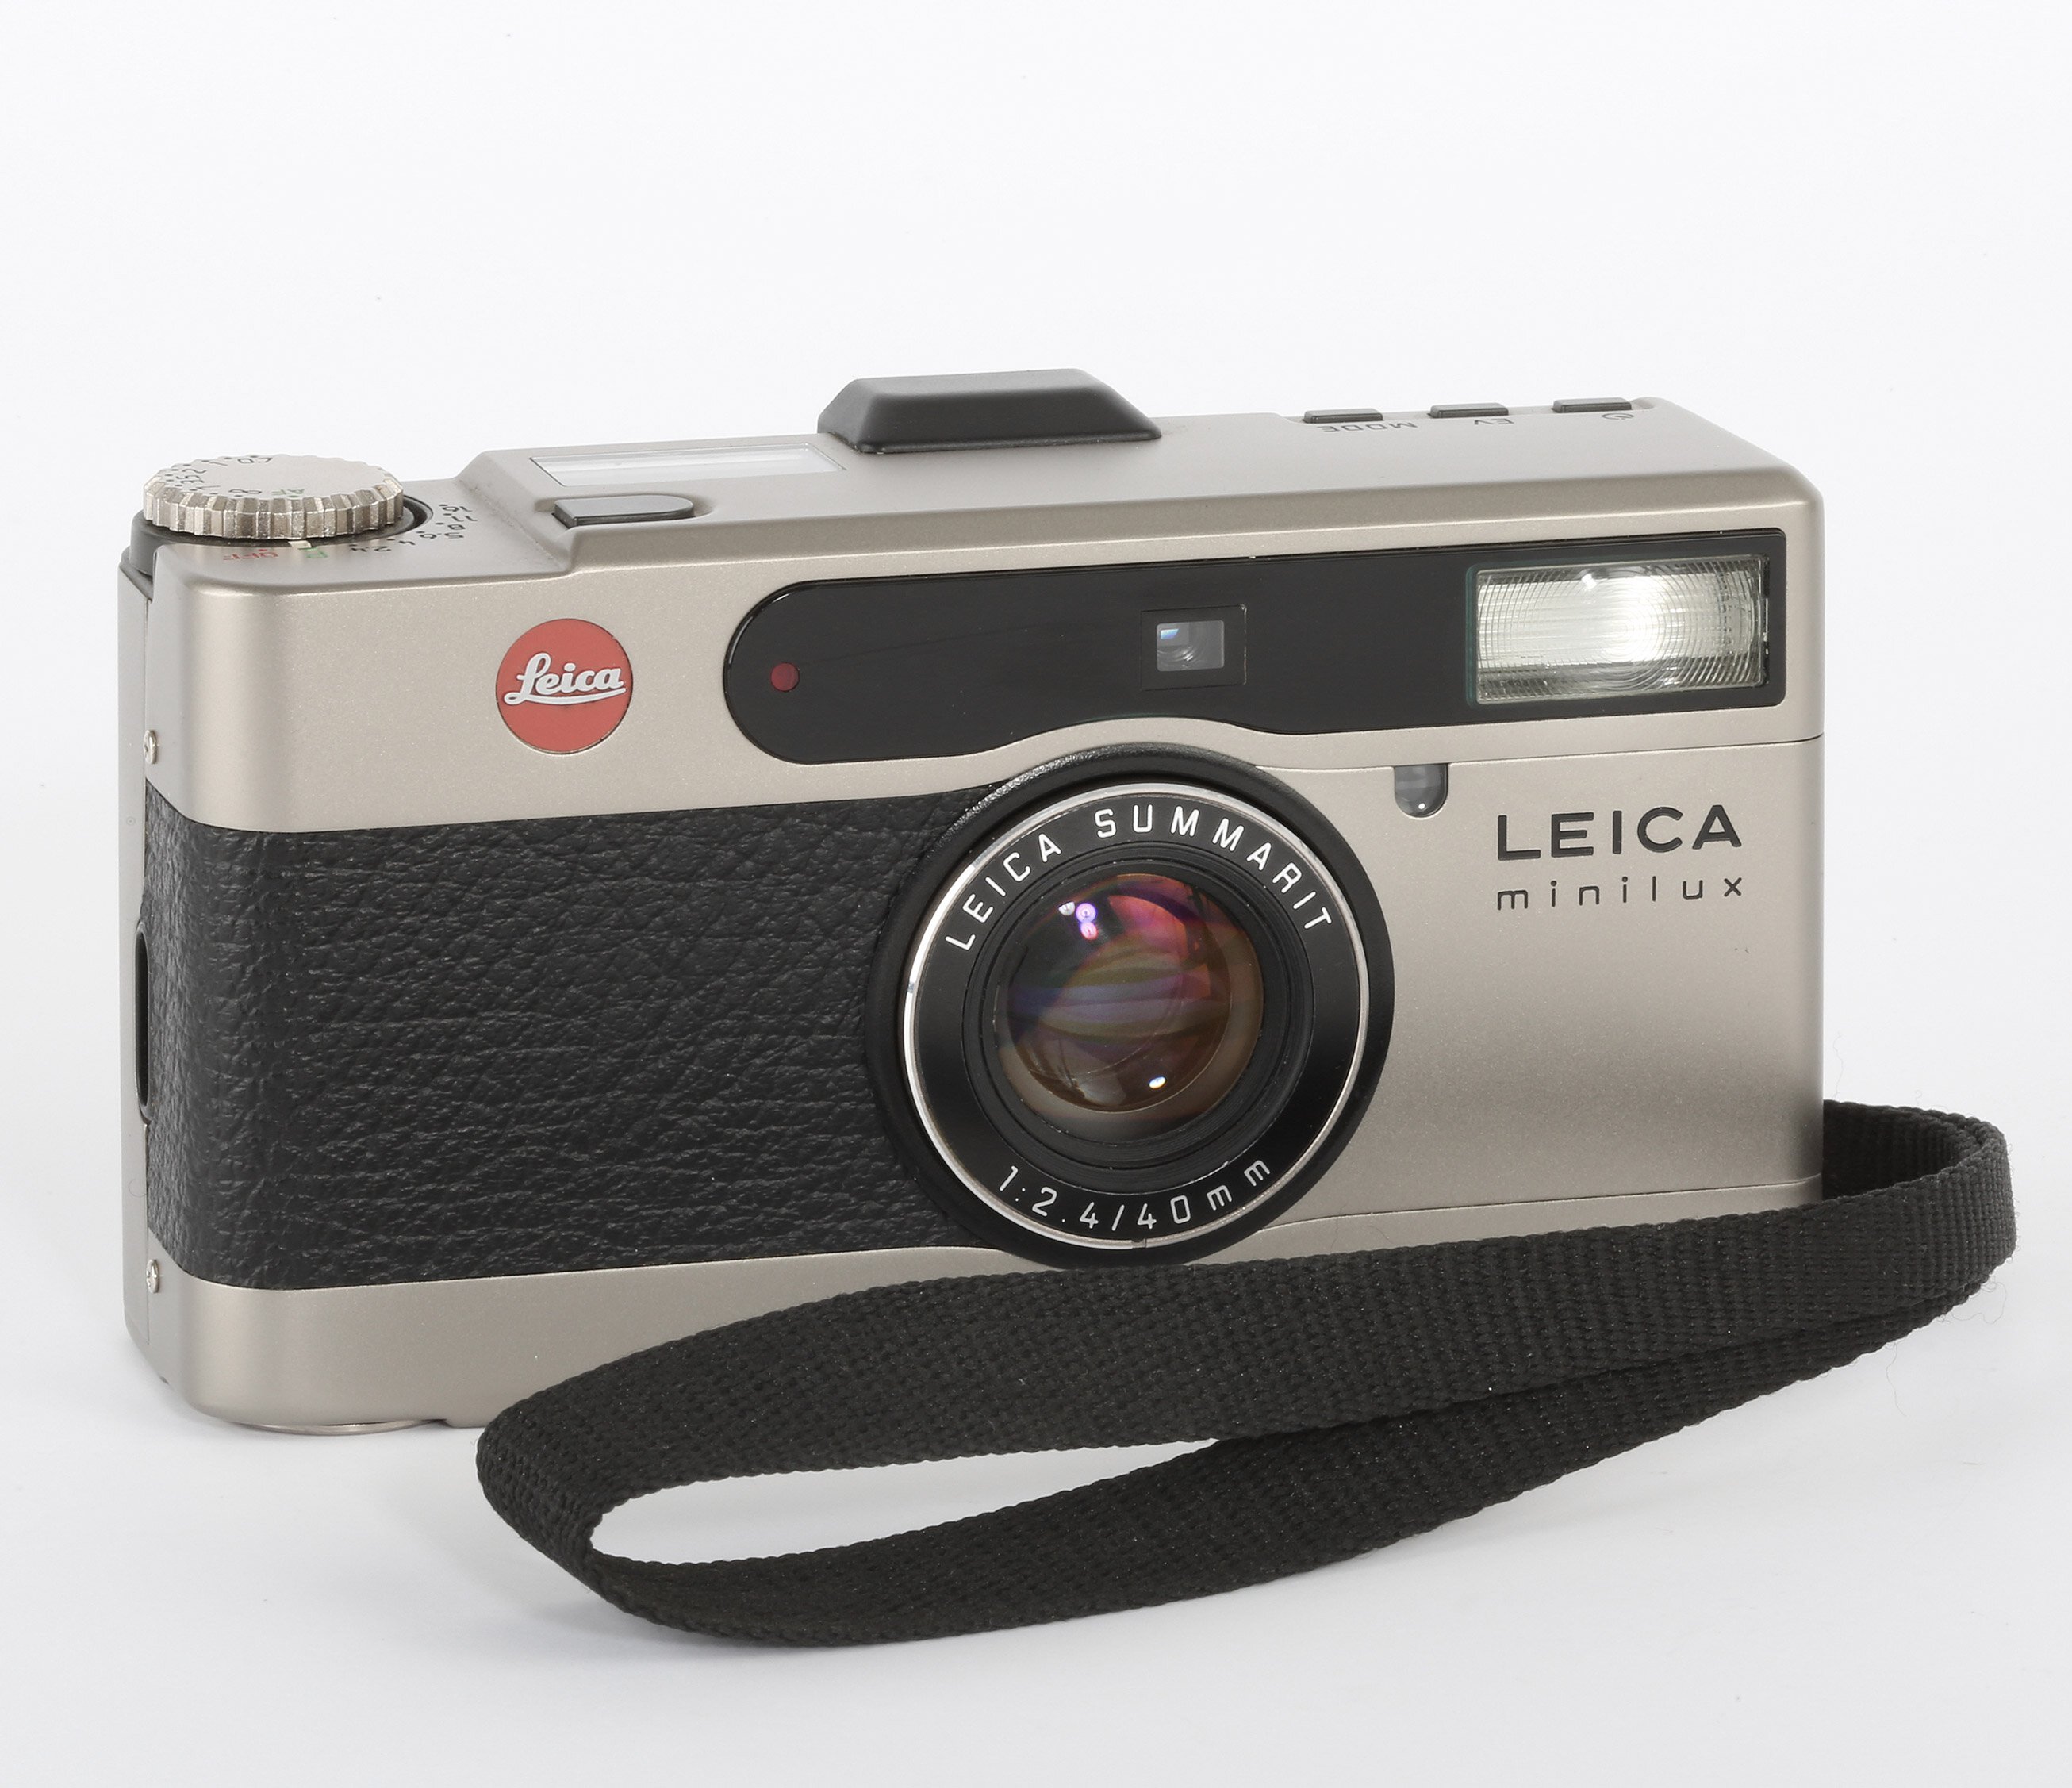 Leitz Leica minilux Leica Summarit 40mm f2,4